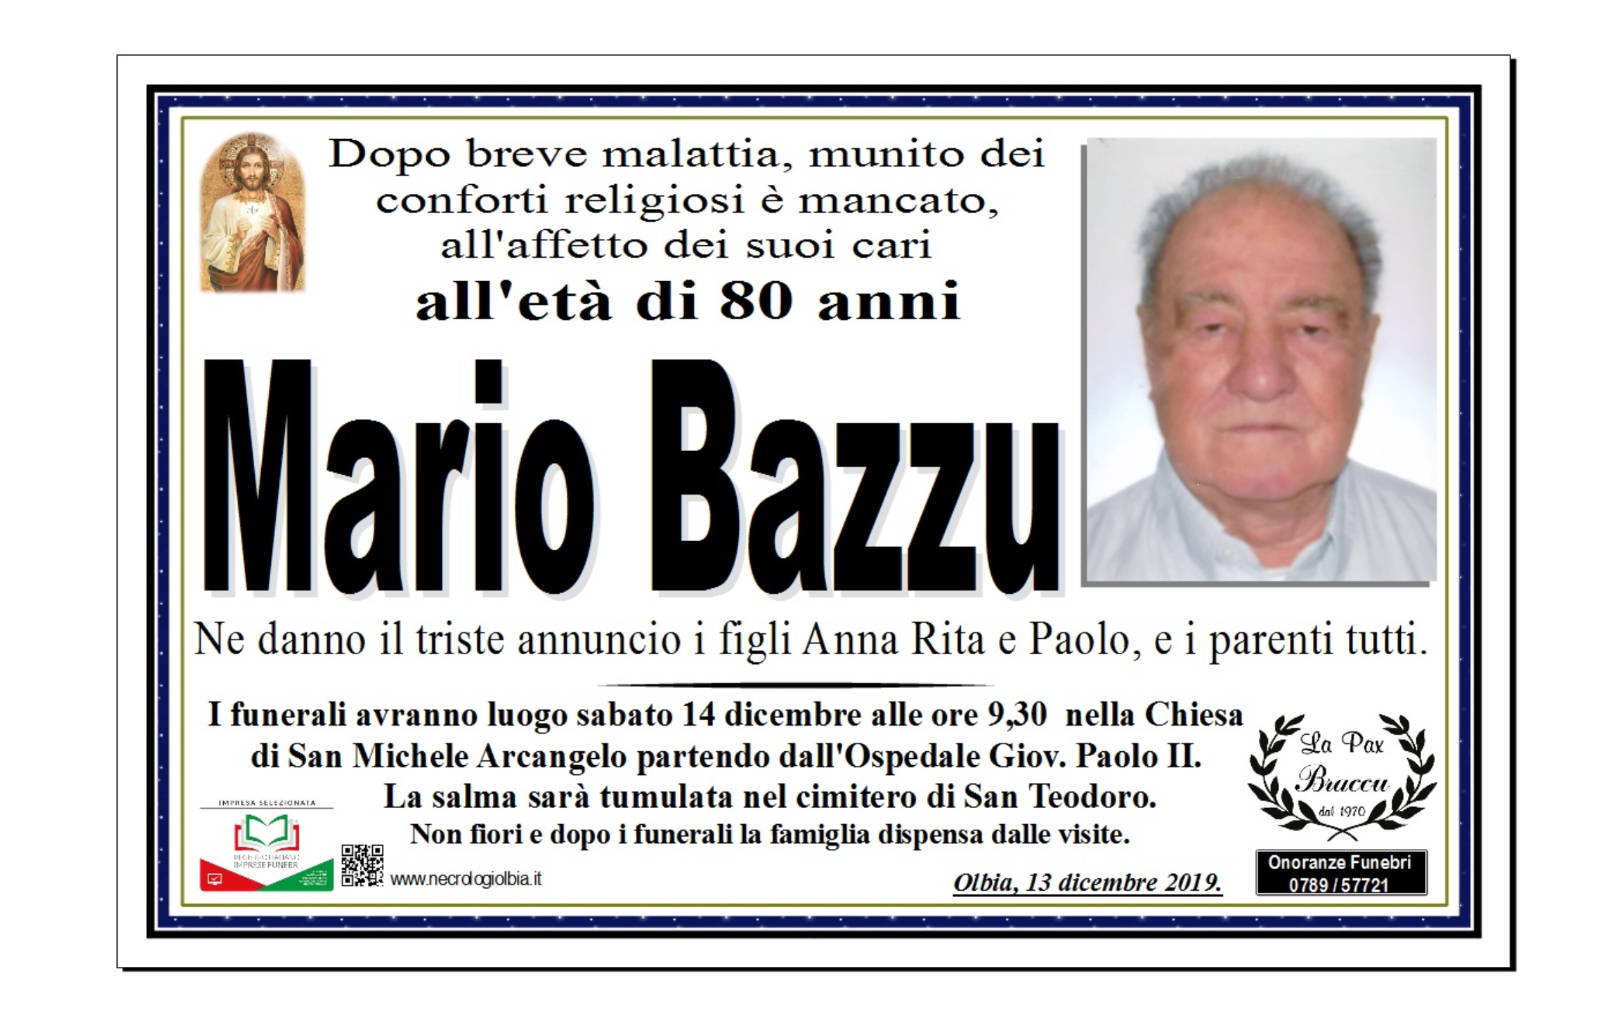 Mario Bazzu